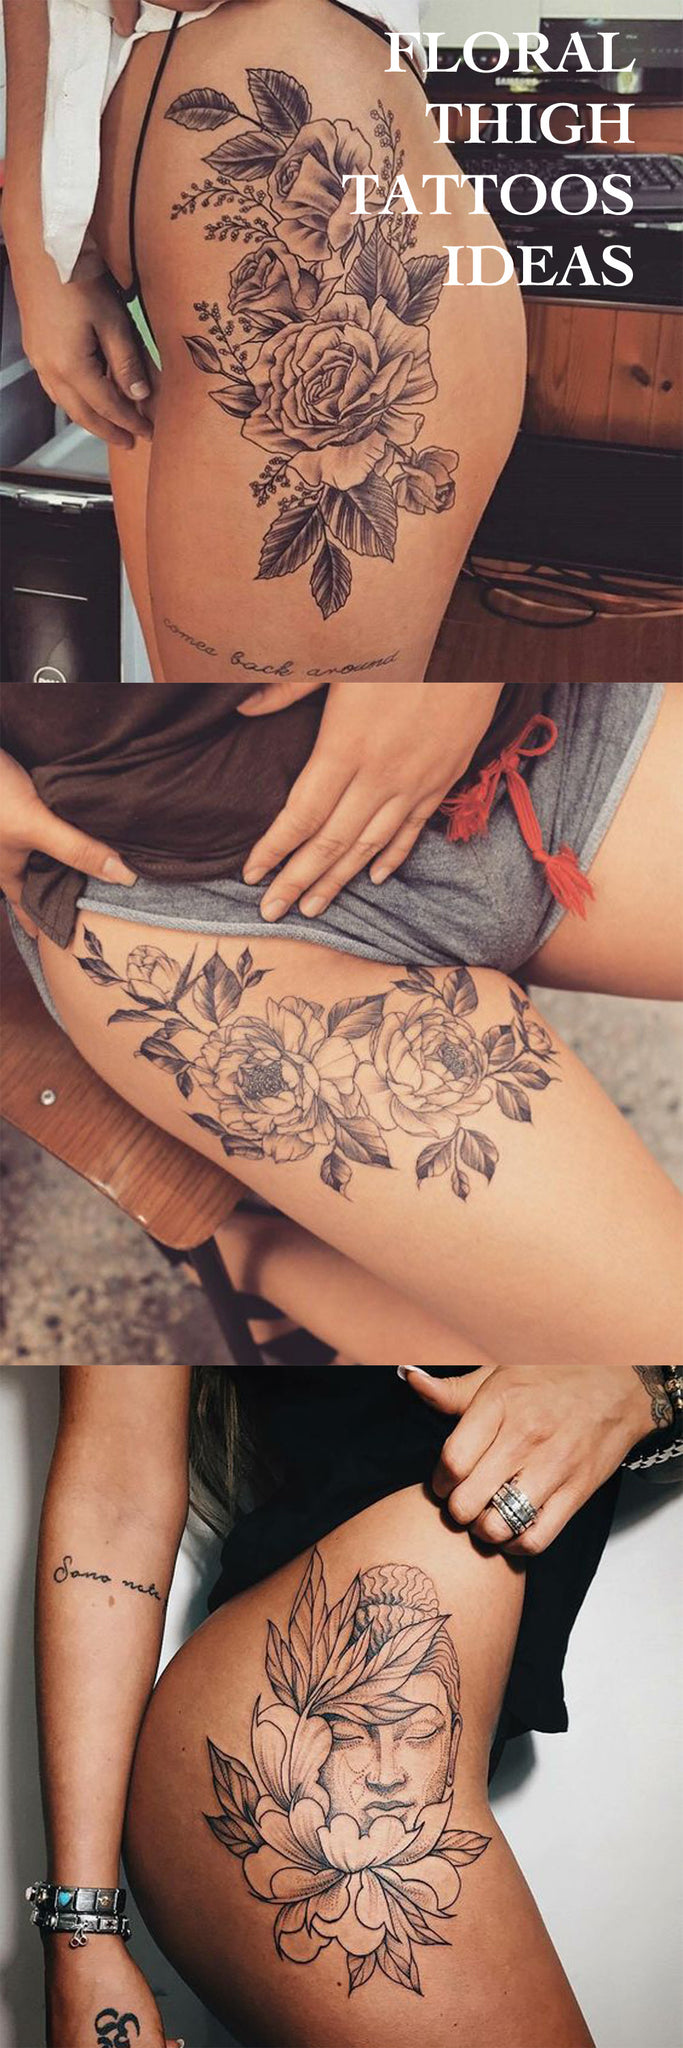 Floral Thigh Tattoo Ideas at MyBodiArt.com - Flower Buddha Black and White Tat